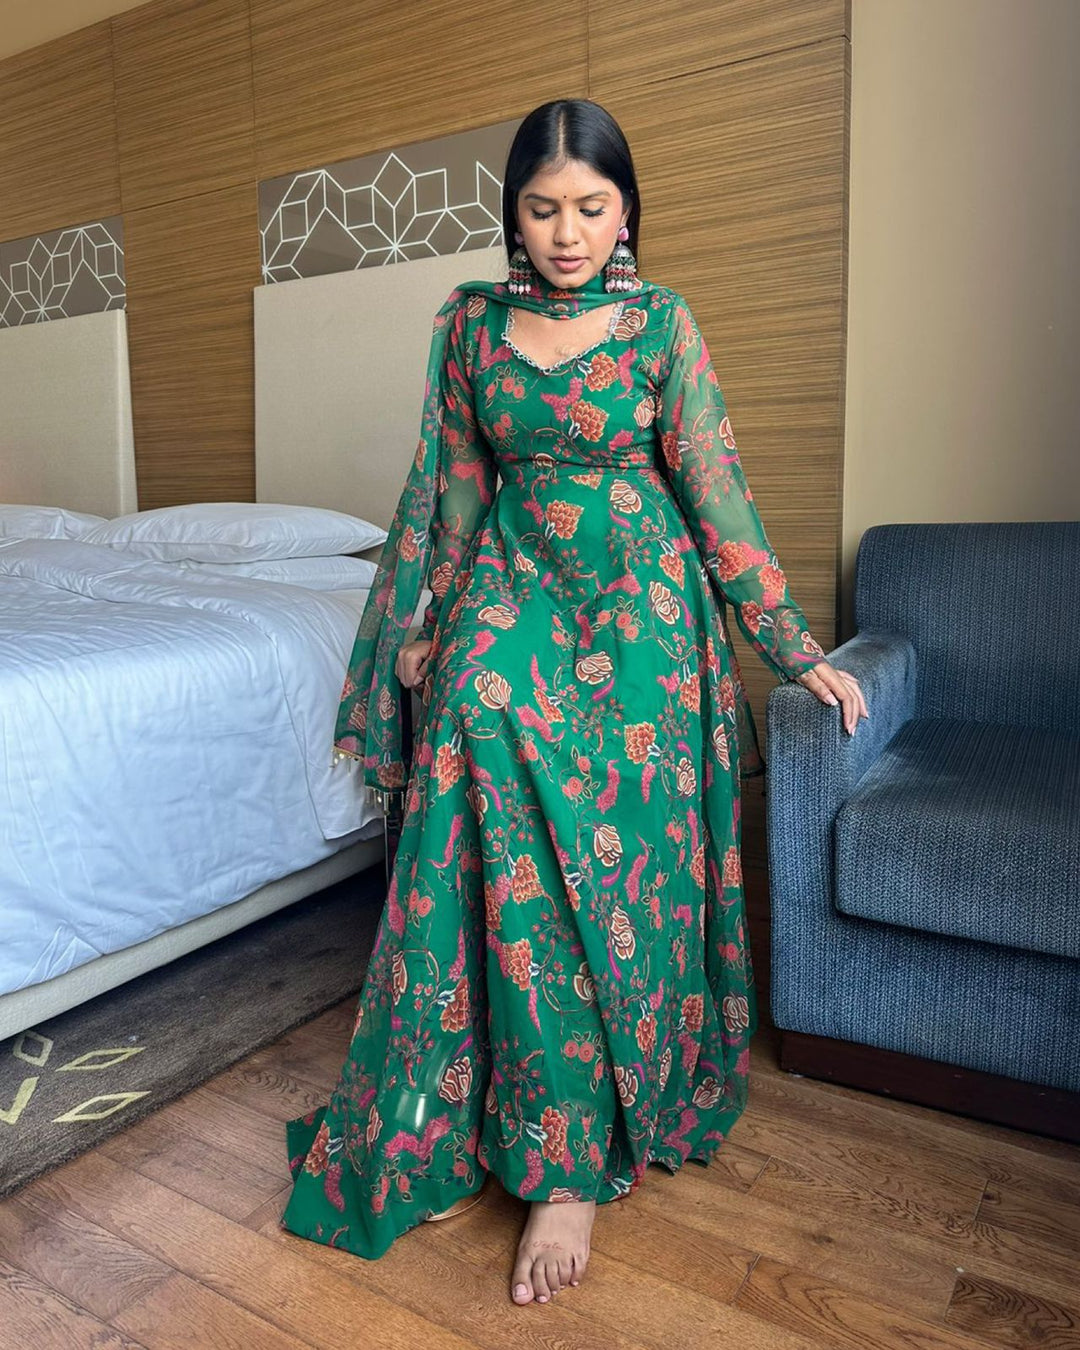 Jeetu Sri Yadav in Green Colour Printe Floor Length Two Piece Anarkali Suit